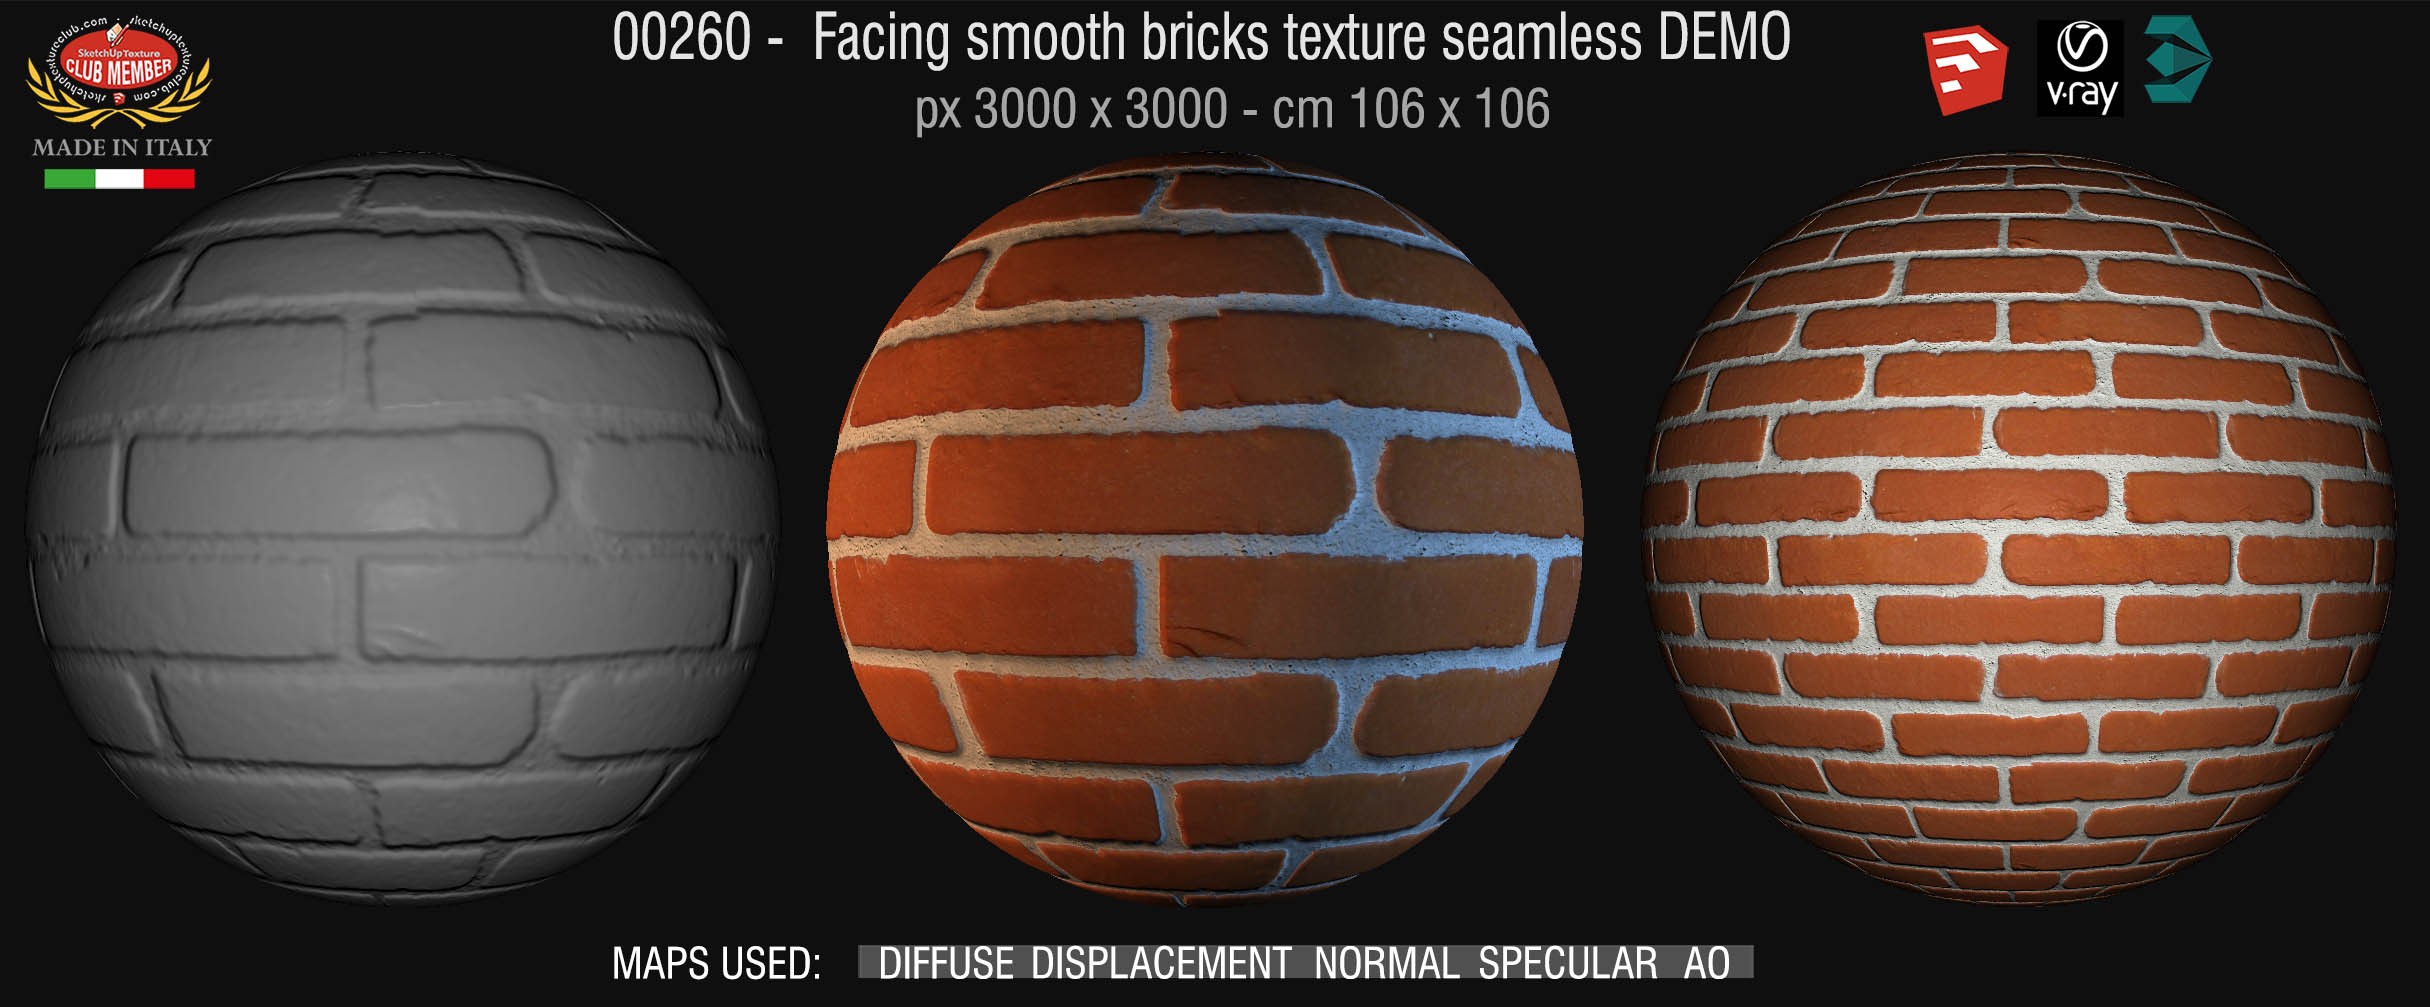 00260 Facing smooth bricks texture seamless + maps DEMO